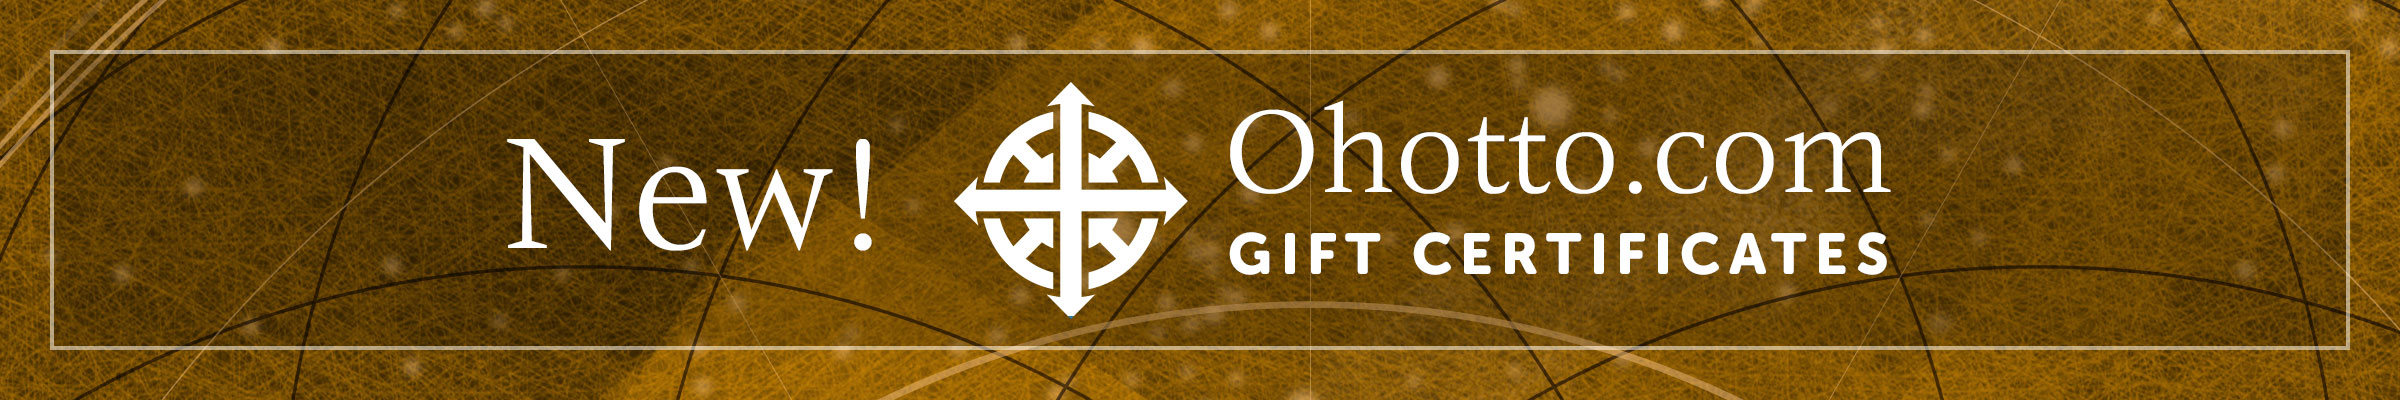 Ohotto.com Gift Certificates